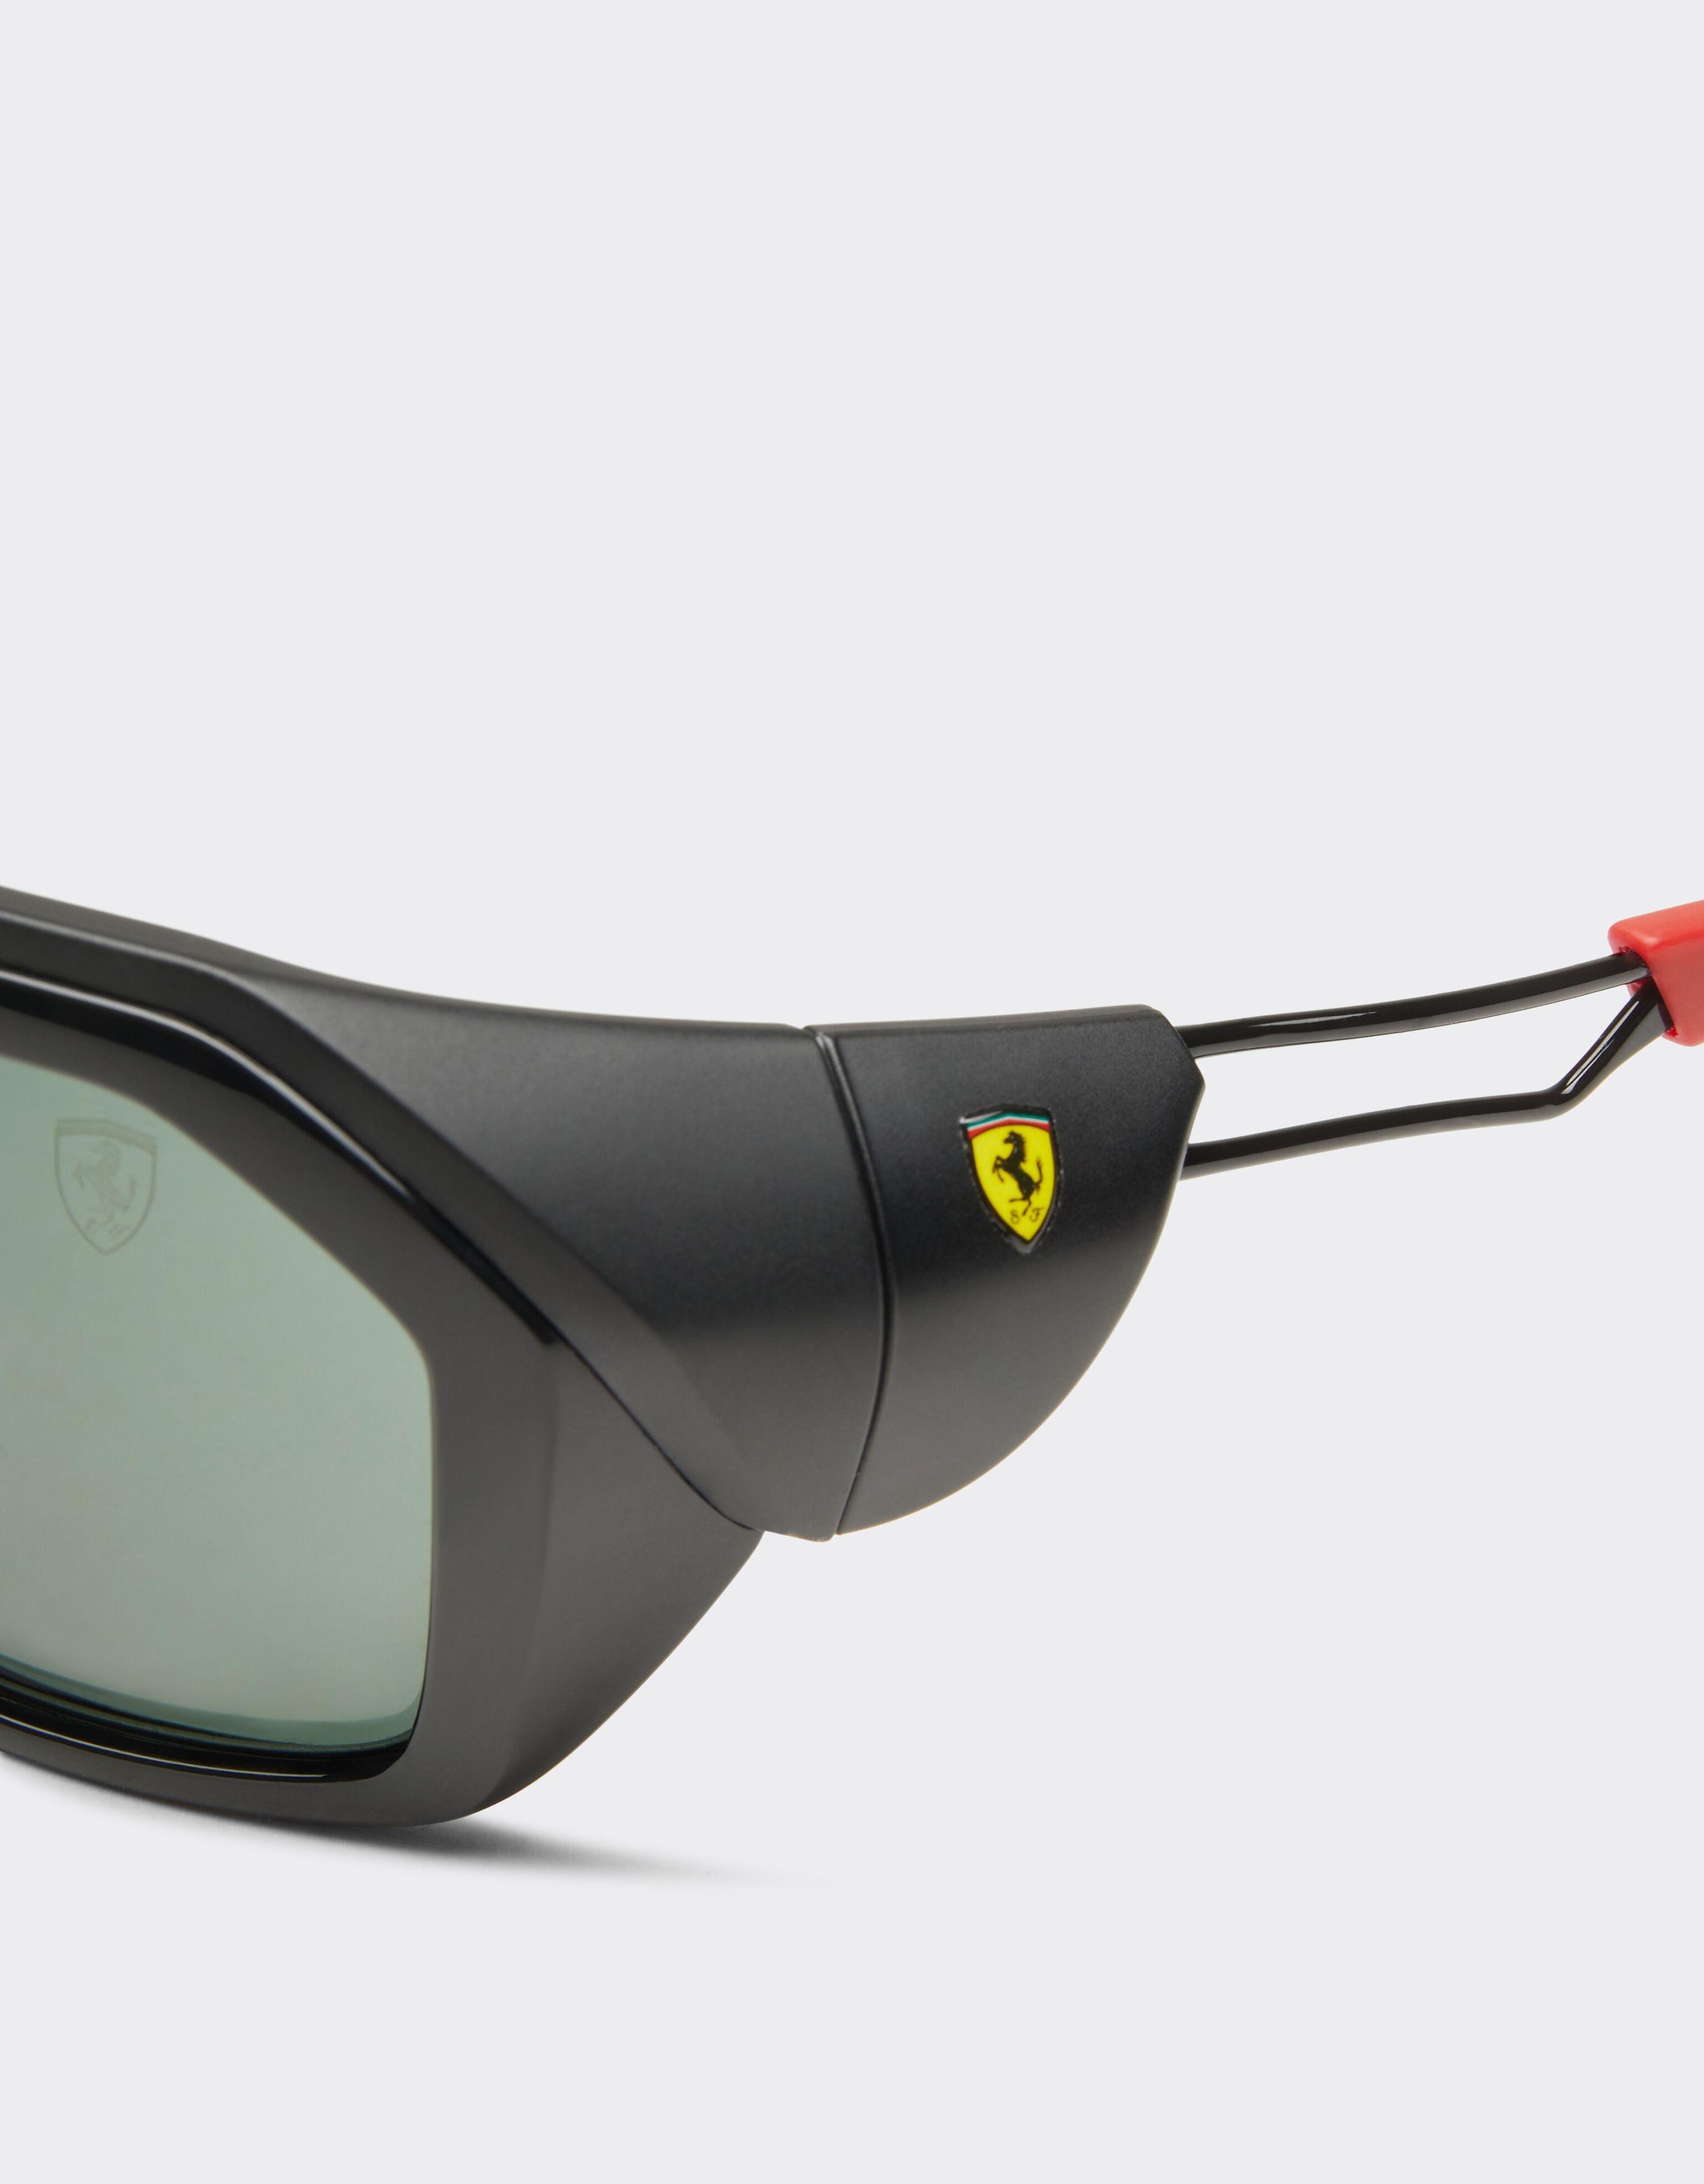 Ferrari Ray-Ban for Scuderia Ferrari RB4367M black with dark green lenses Black F0381f